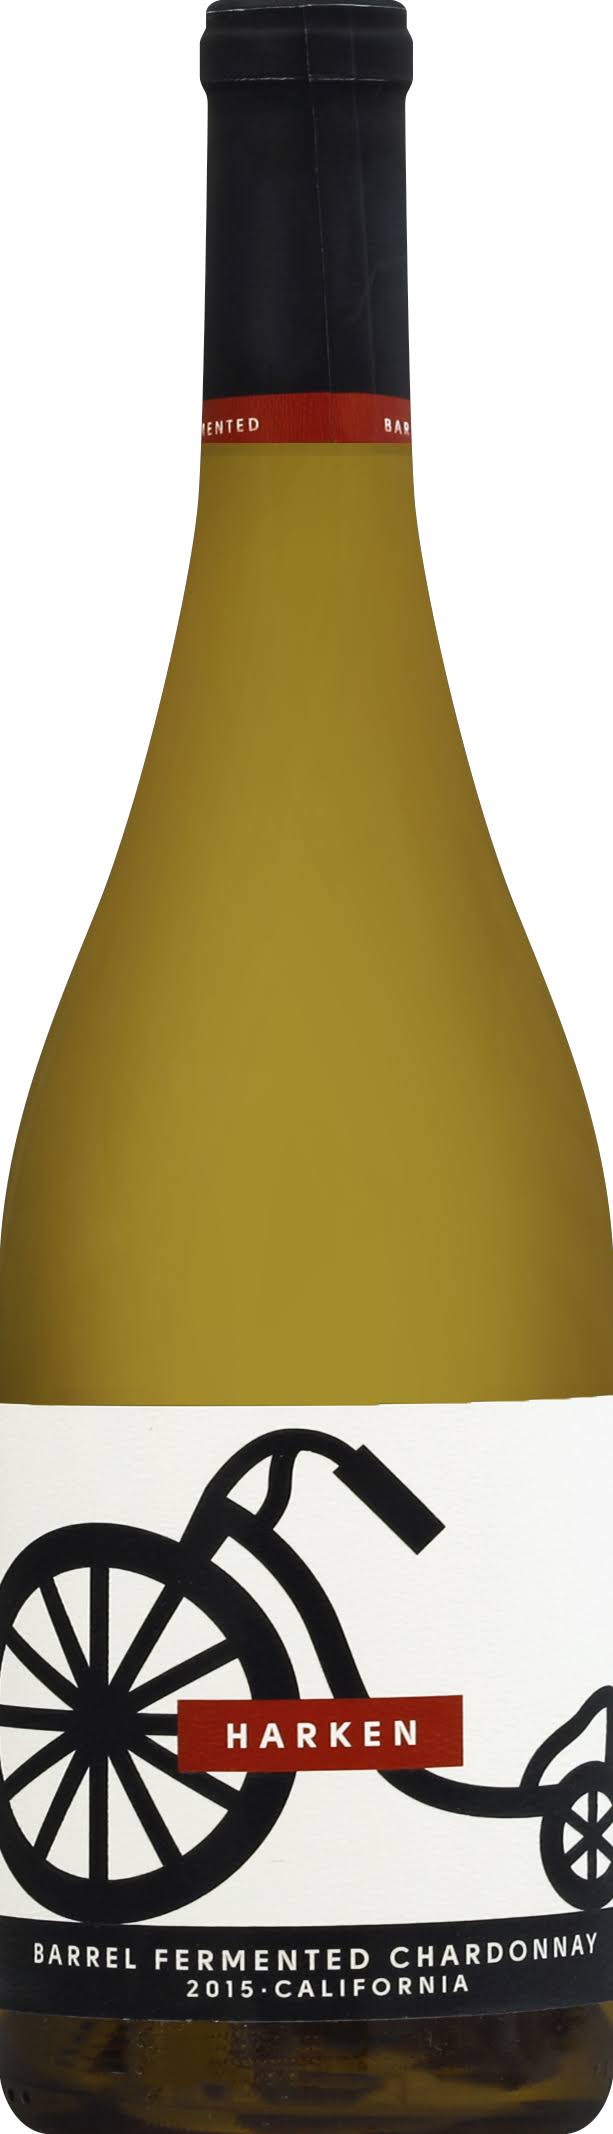 Harken Chardonnay, California, 2015 - 750 ml